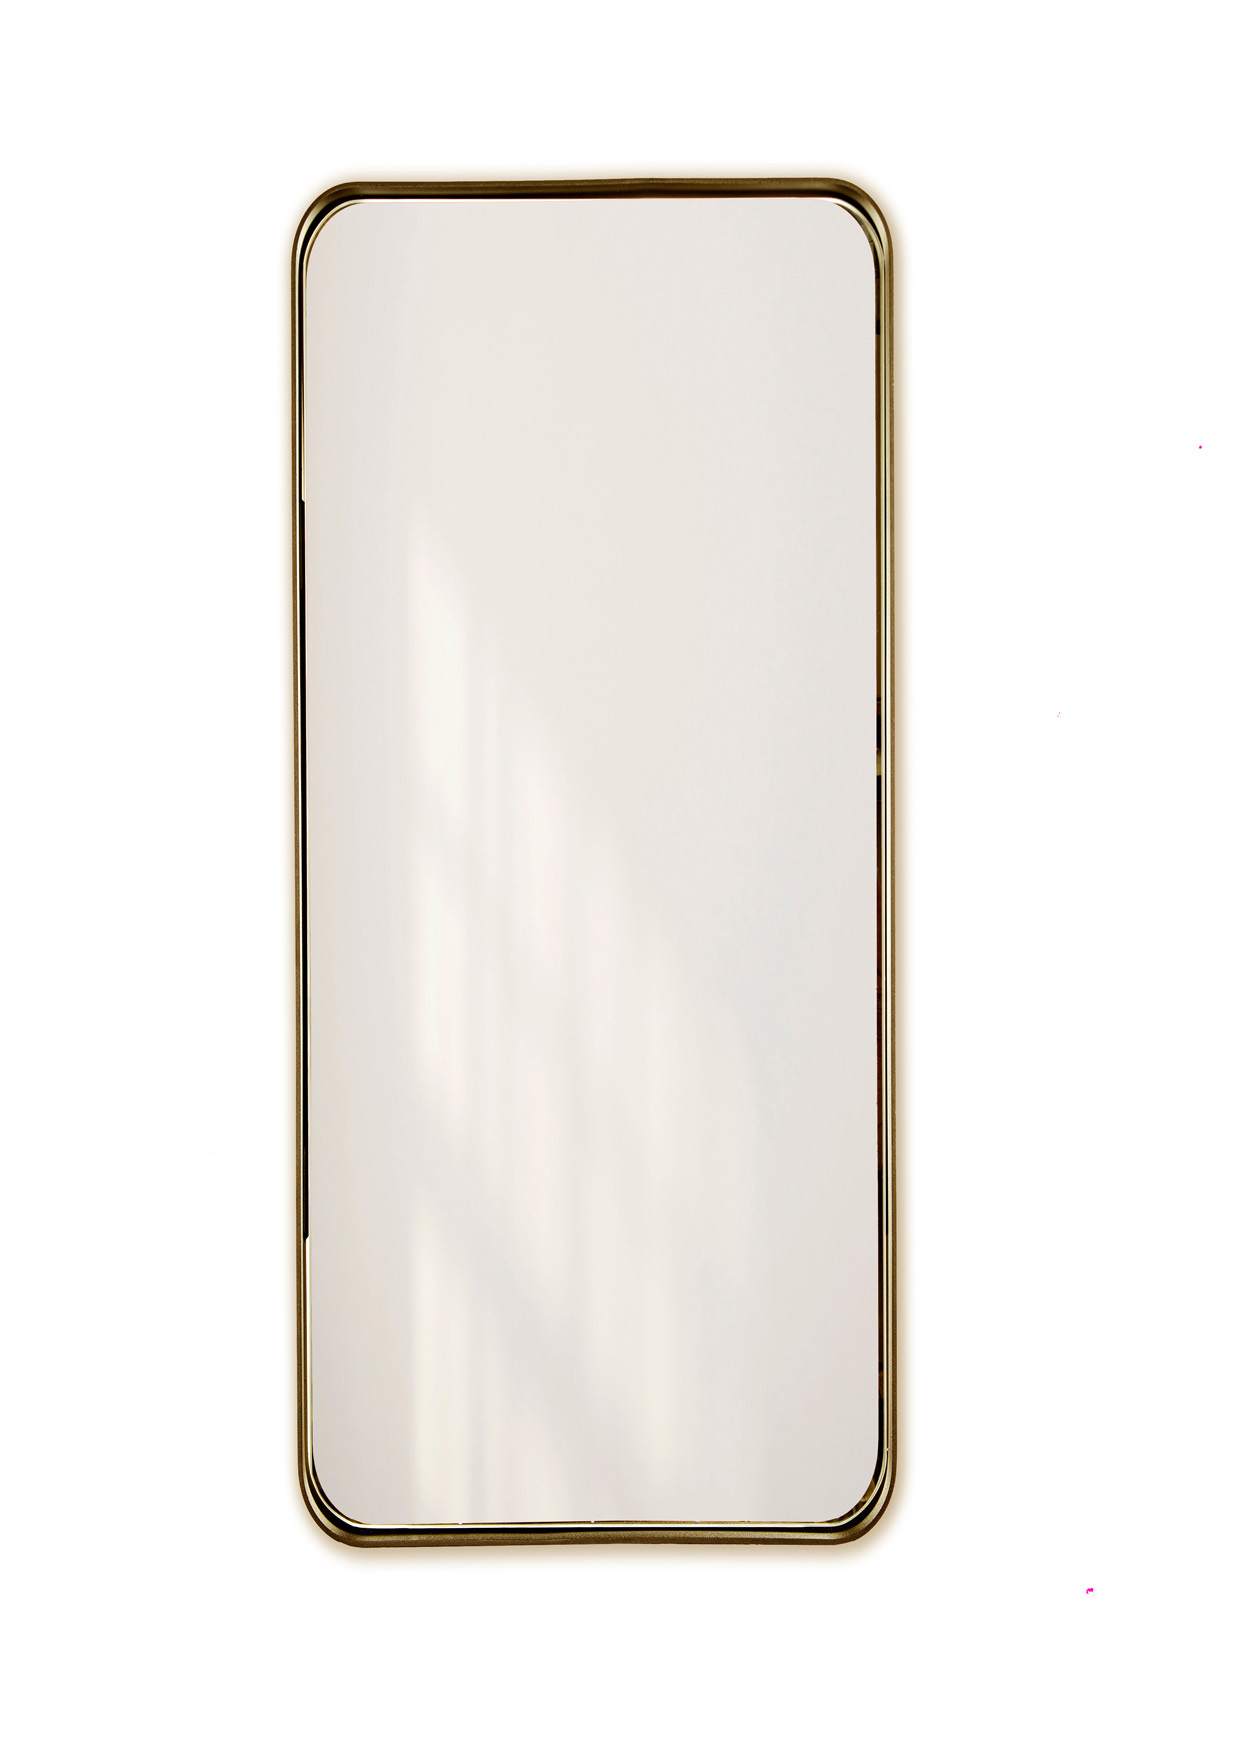 Spiegel OVALIS Gold L | Rahmen Stahl vintage gold | B/H/T: ca. 50 x 150 x 5 cm